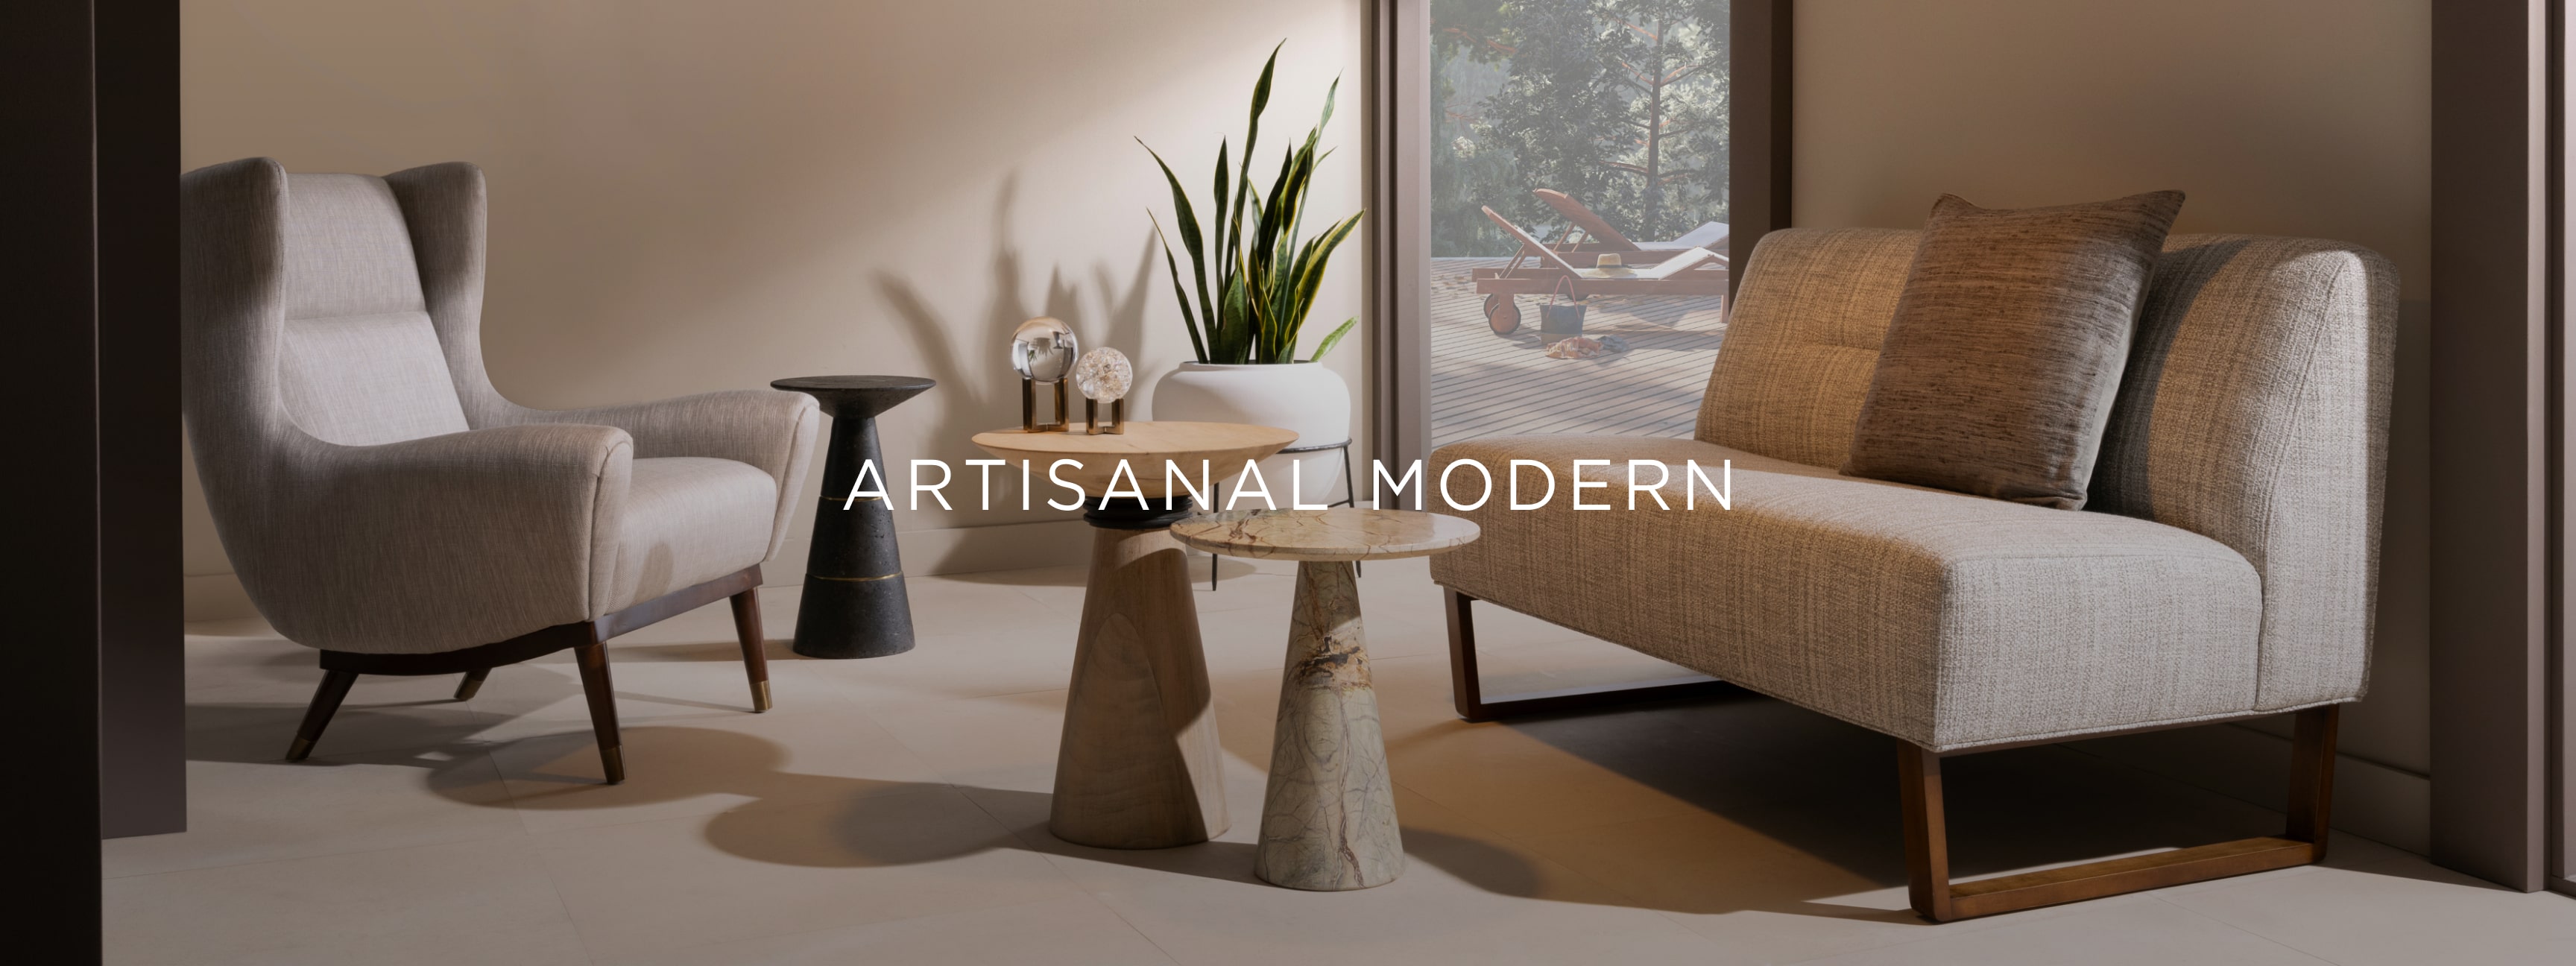 artisanal modern